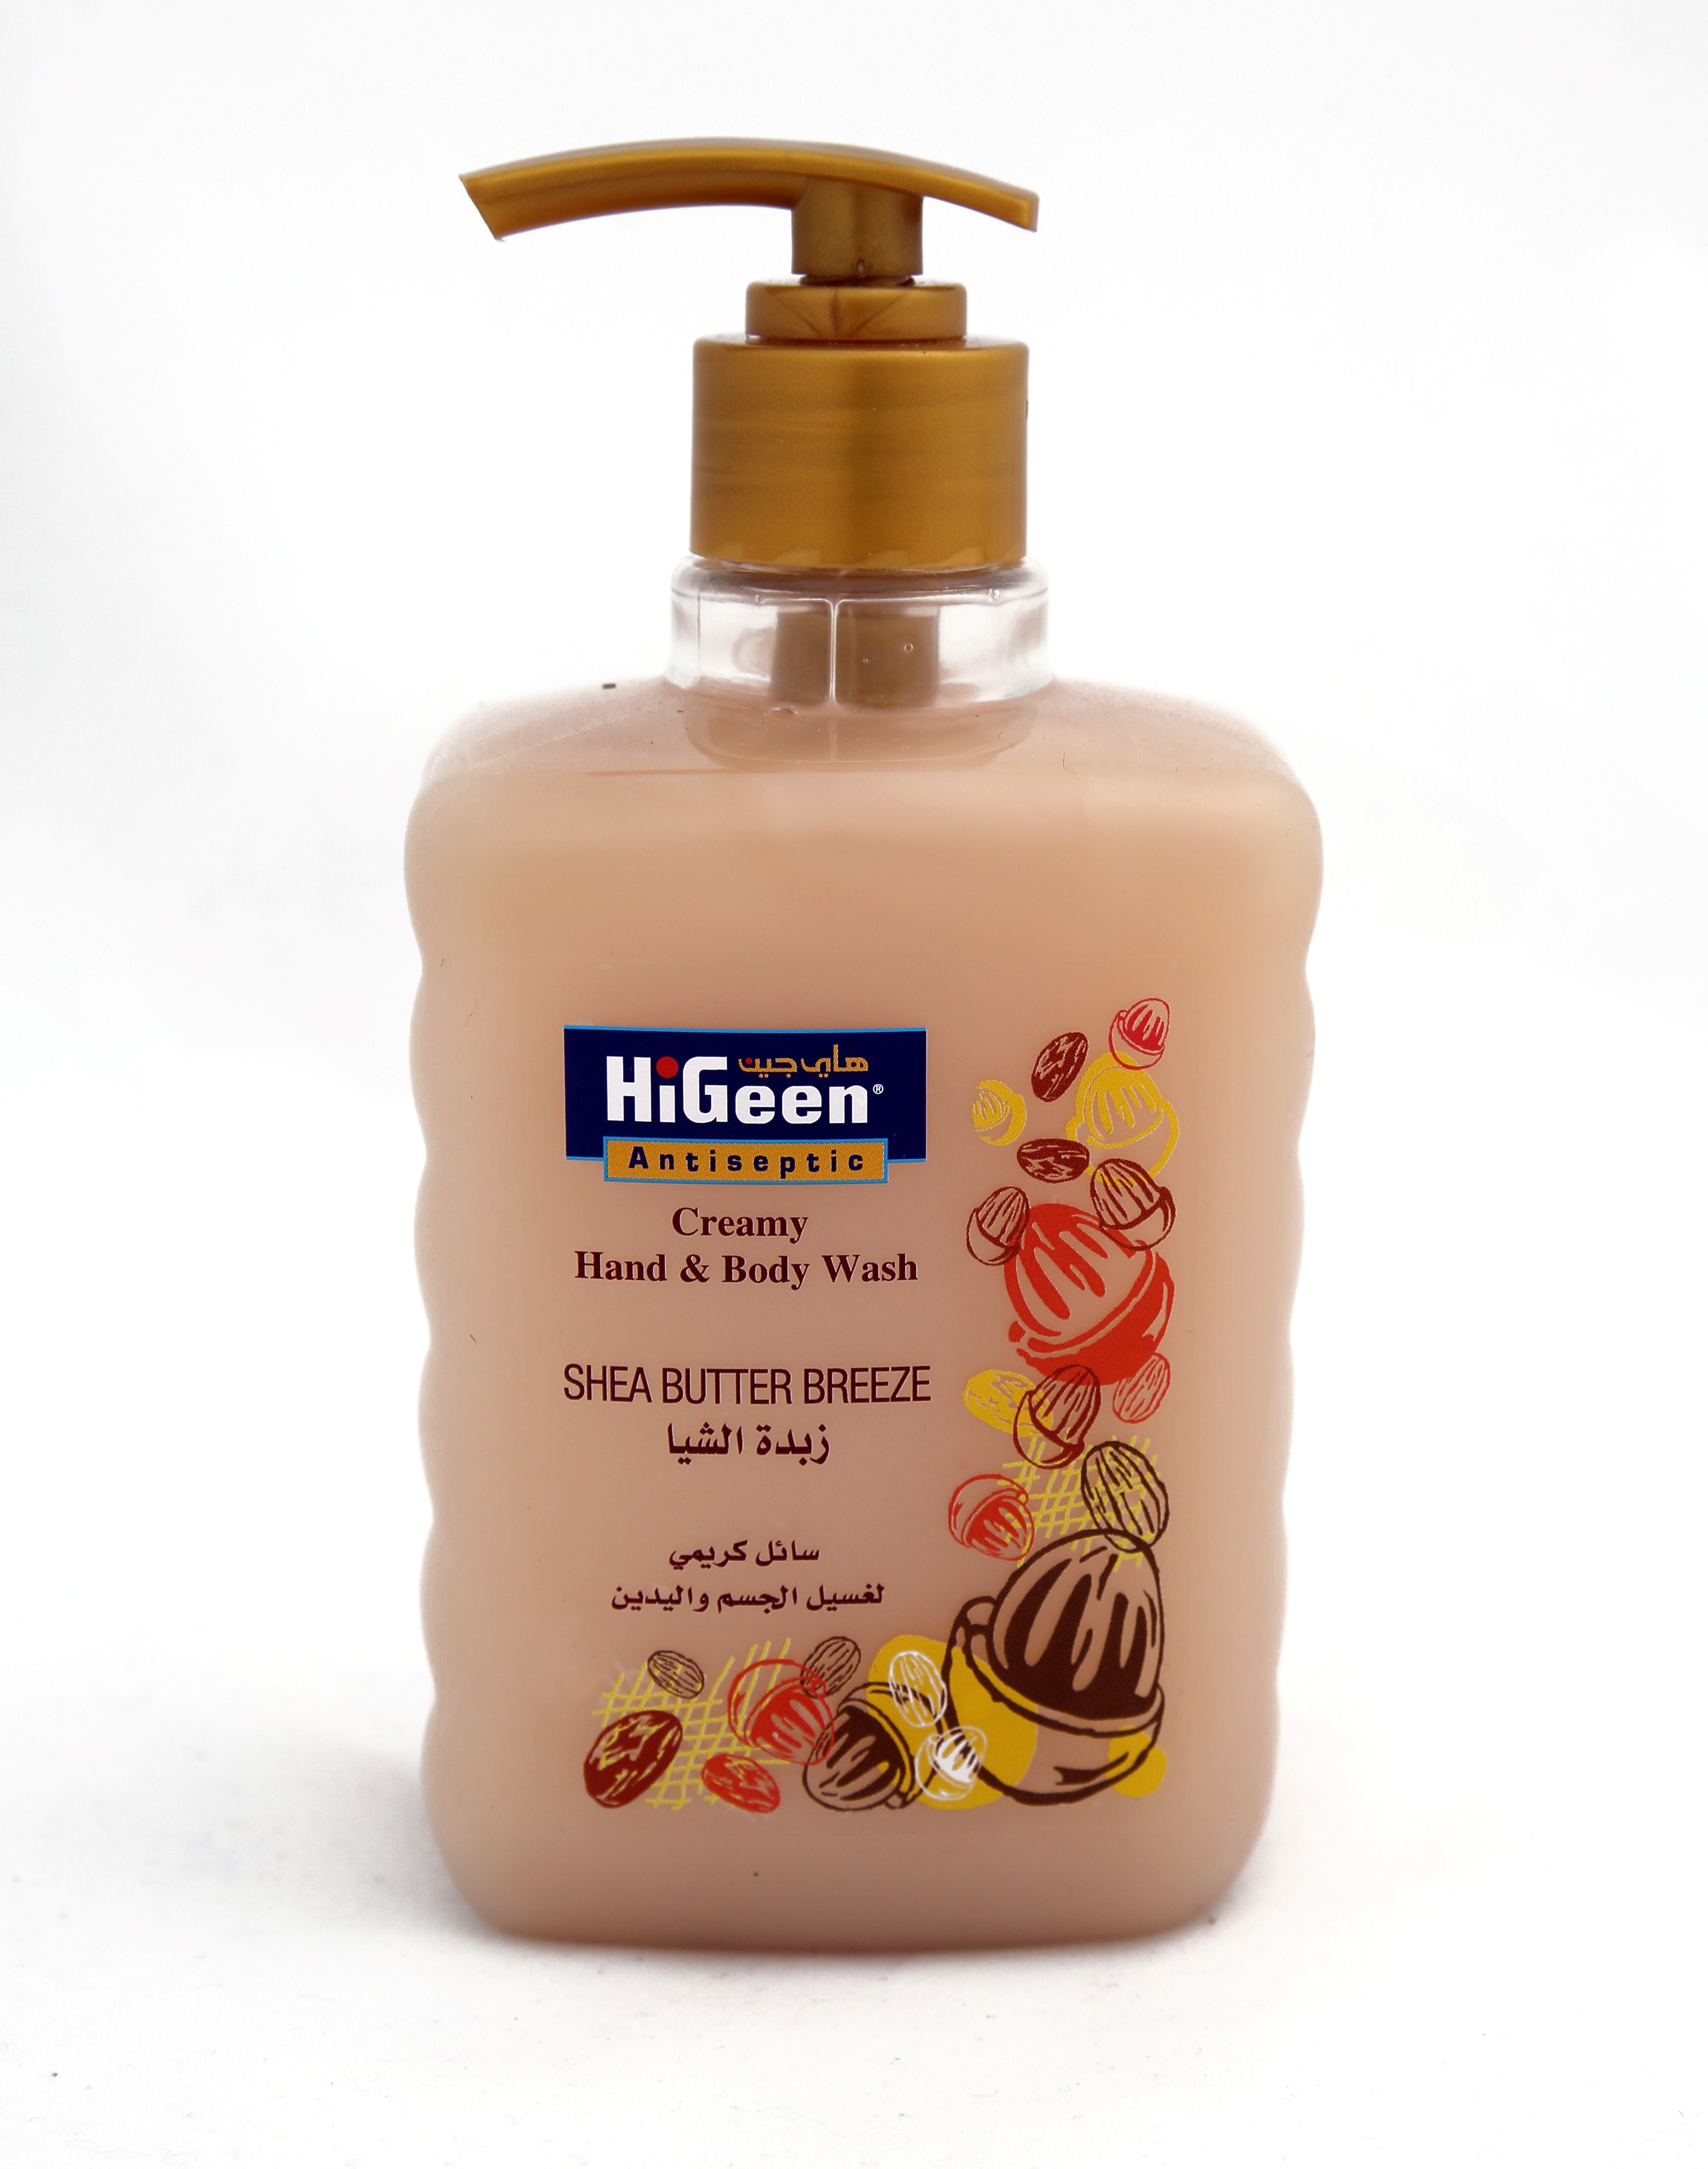 HiGeen Creamy Hand & Body Wash Shea Butter Breeze